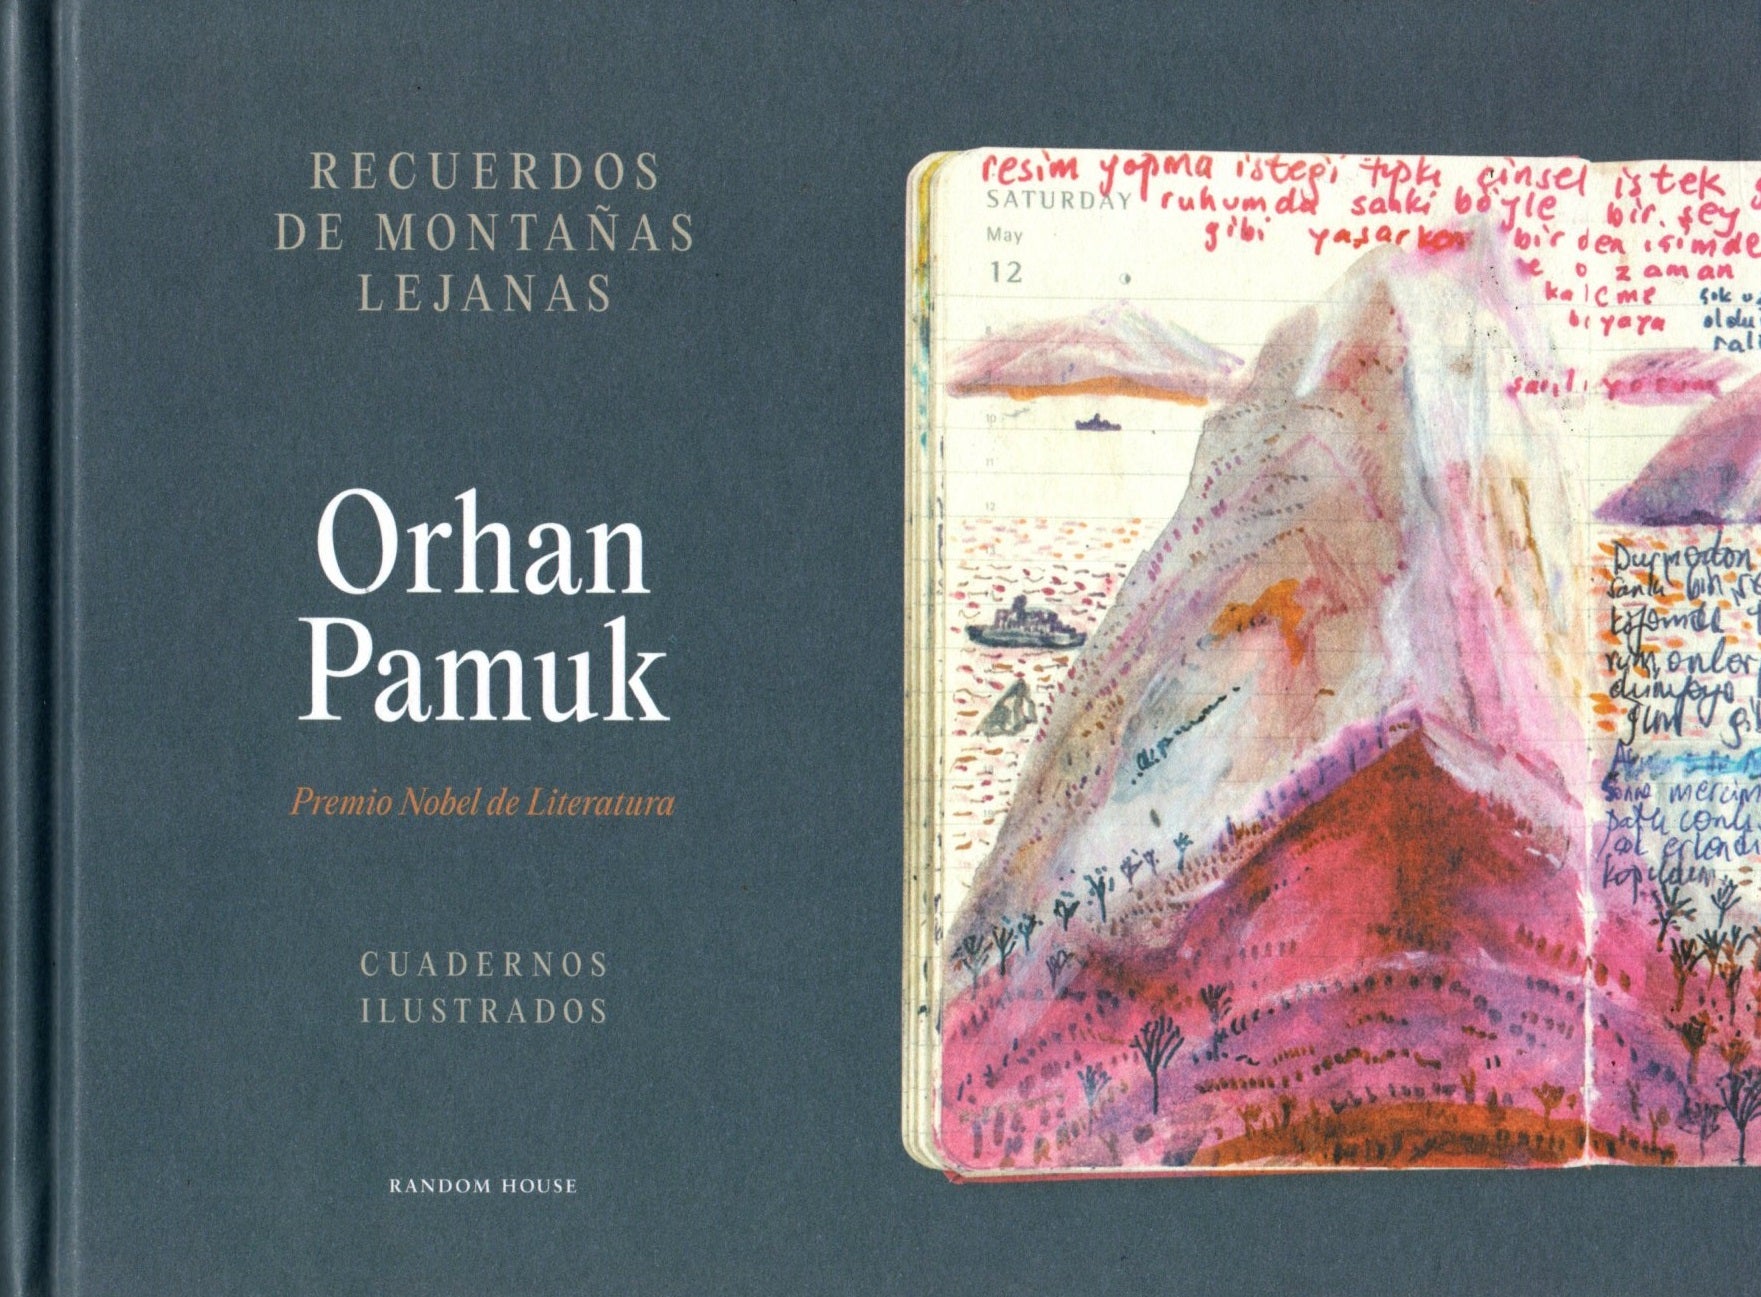 Libro Orhan Pamuk - Recuerdos de montañas lejanas